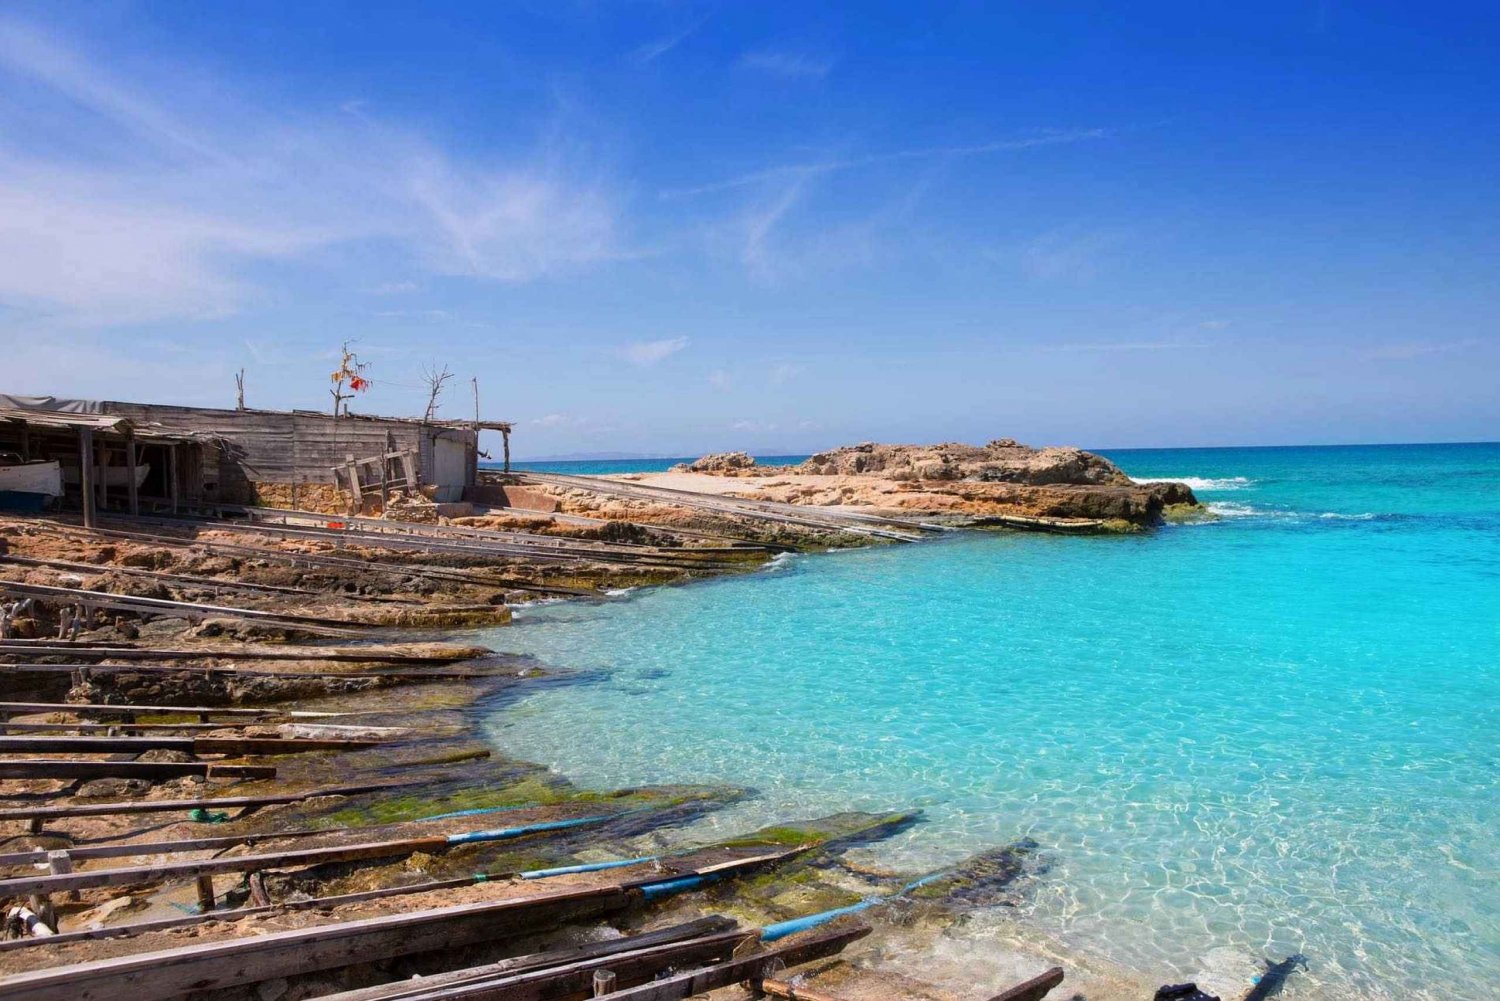 From Ibiza: Same Day Round Trip Ferry Ticket to Formentera